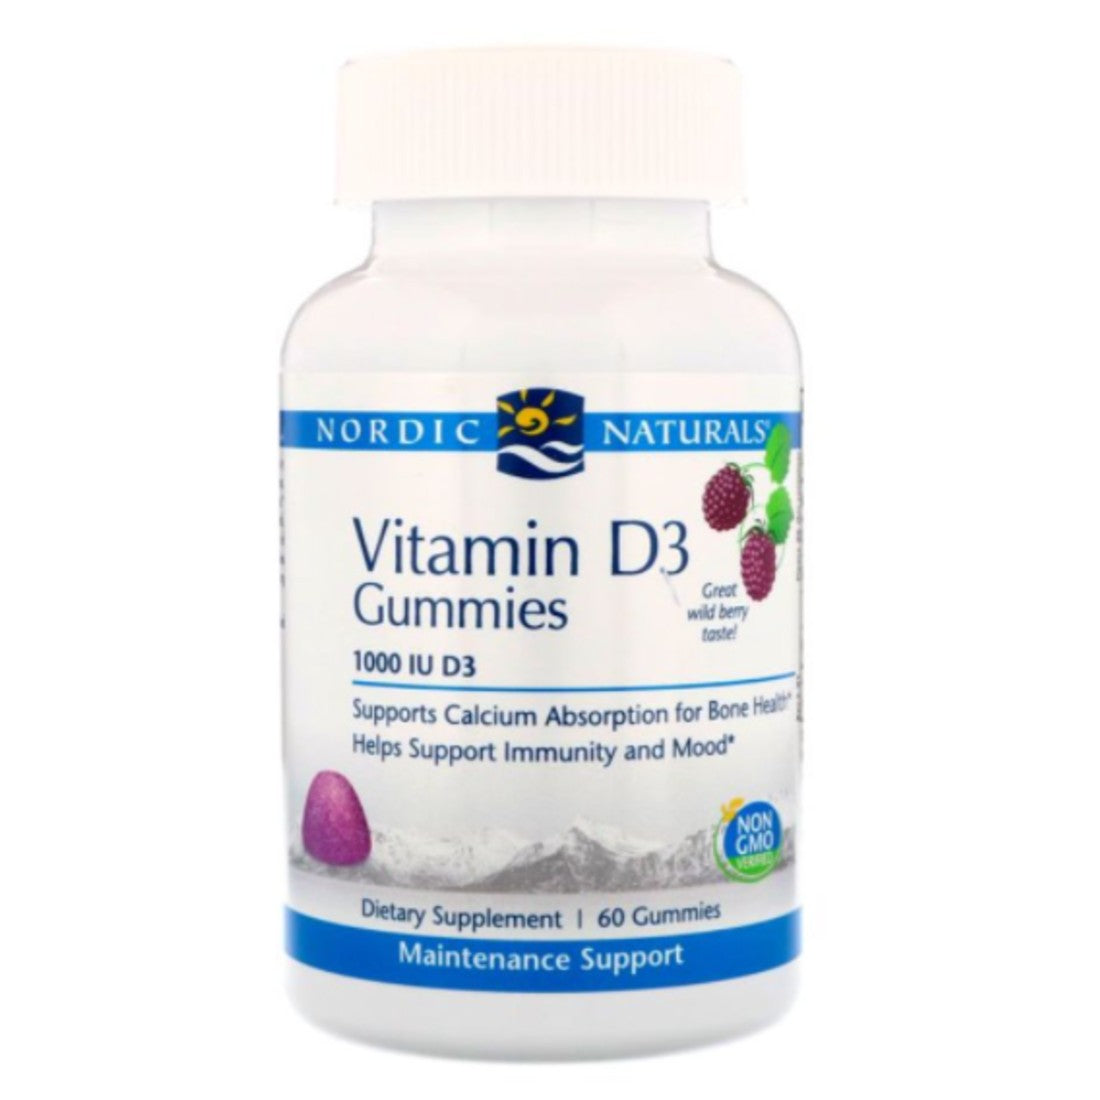 Vitamin D3 Gummies - My Village Green